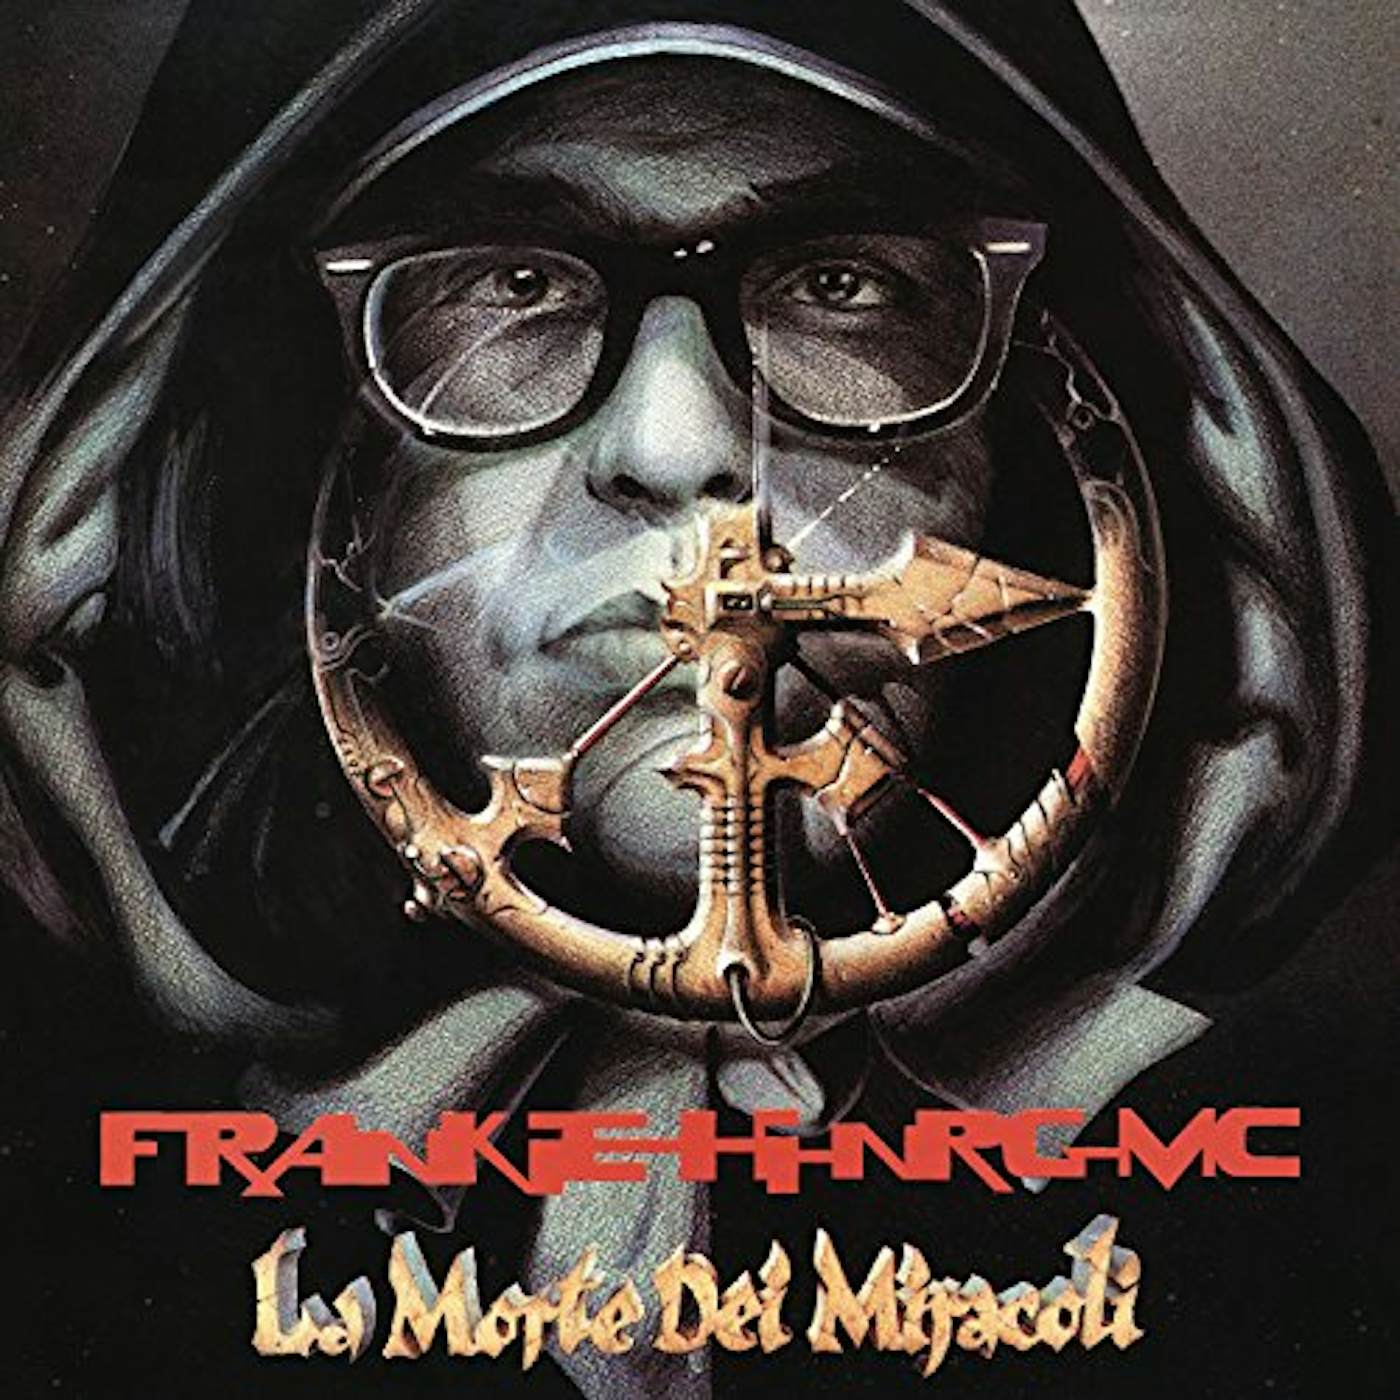 Frankie hi-nrg mc La morte dei miracoli Vinyl Record